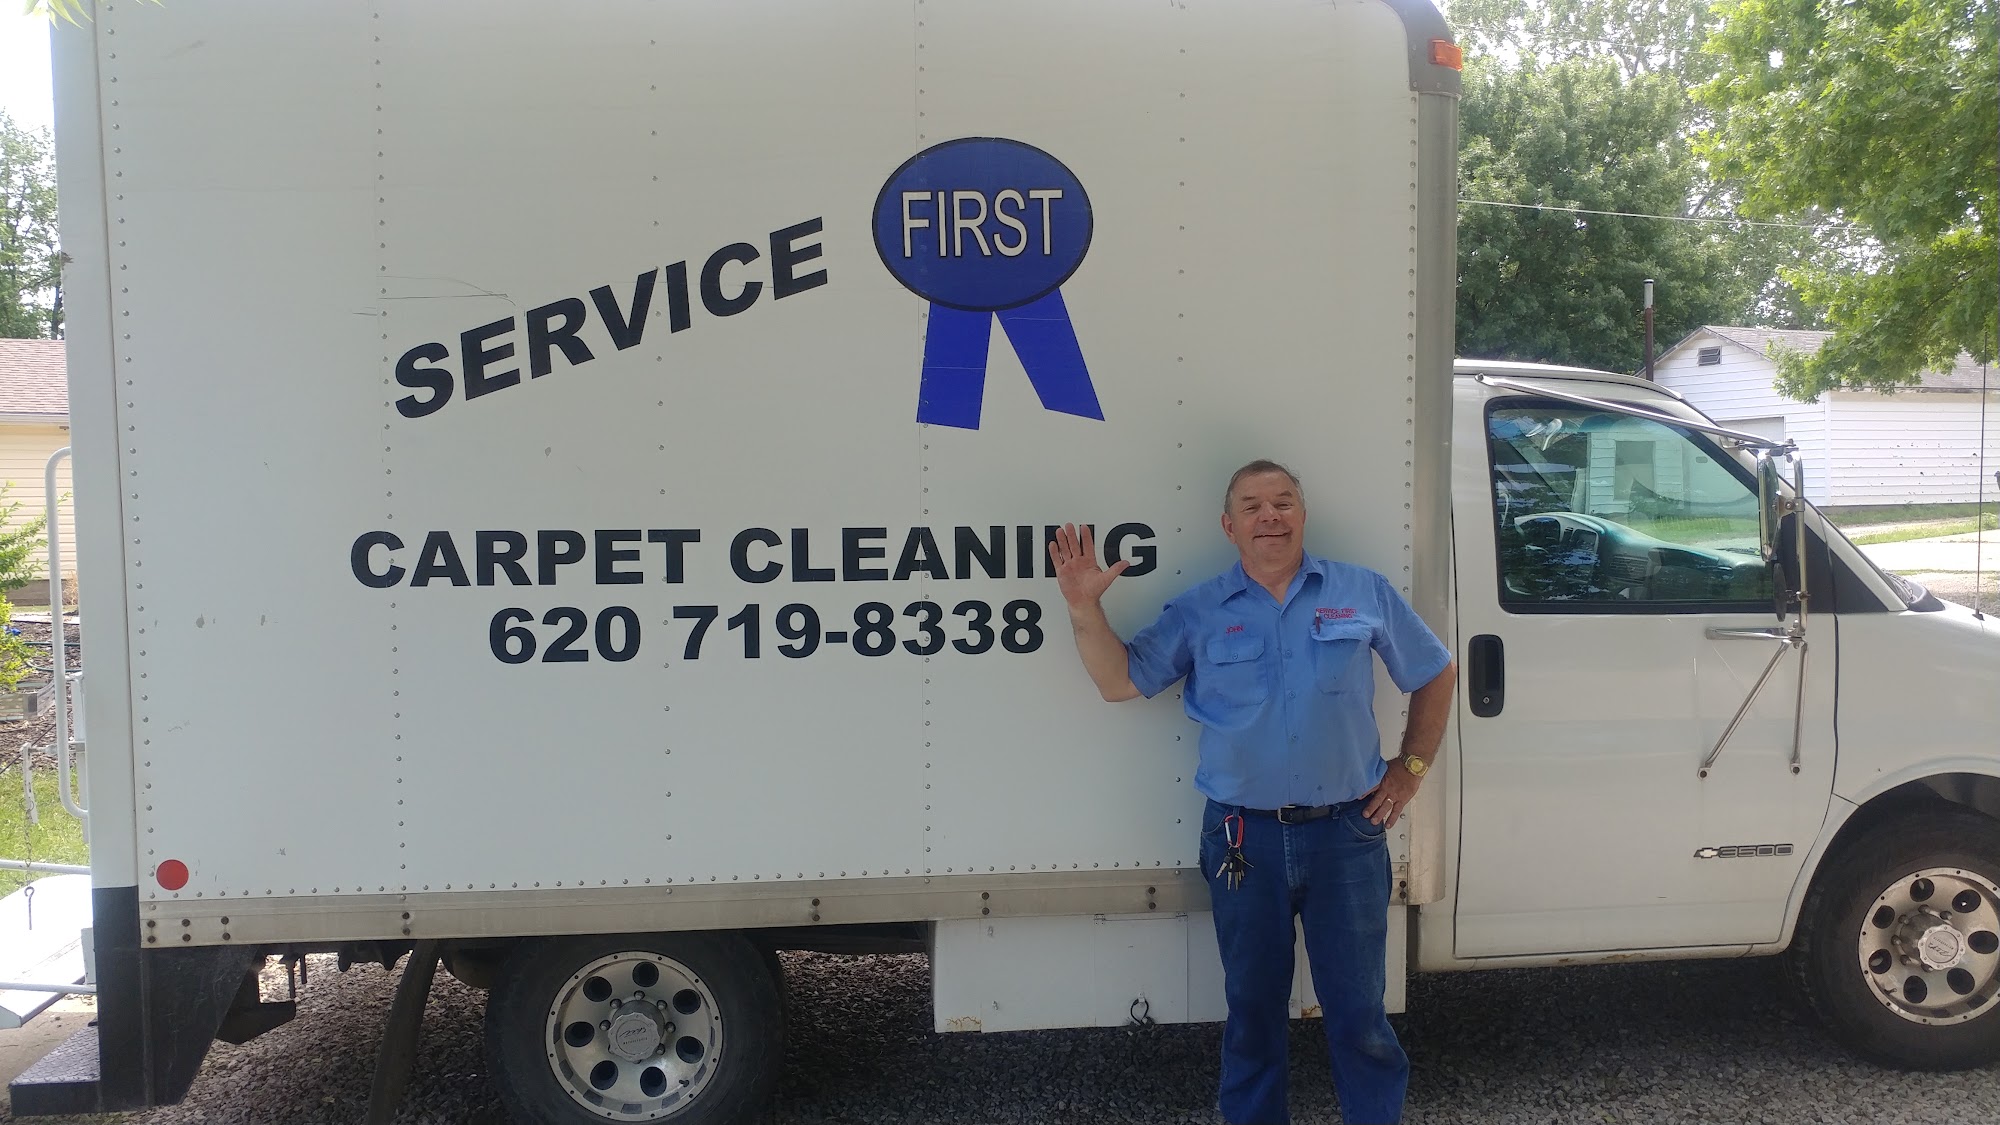 Service First Cleaning 120 S Washington St, Fort Scott Kansas 66701